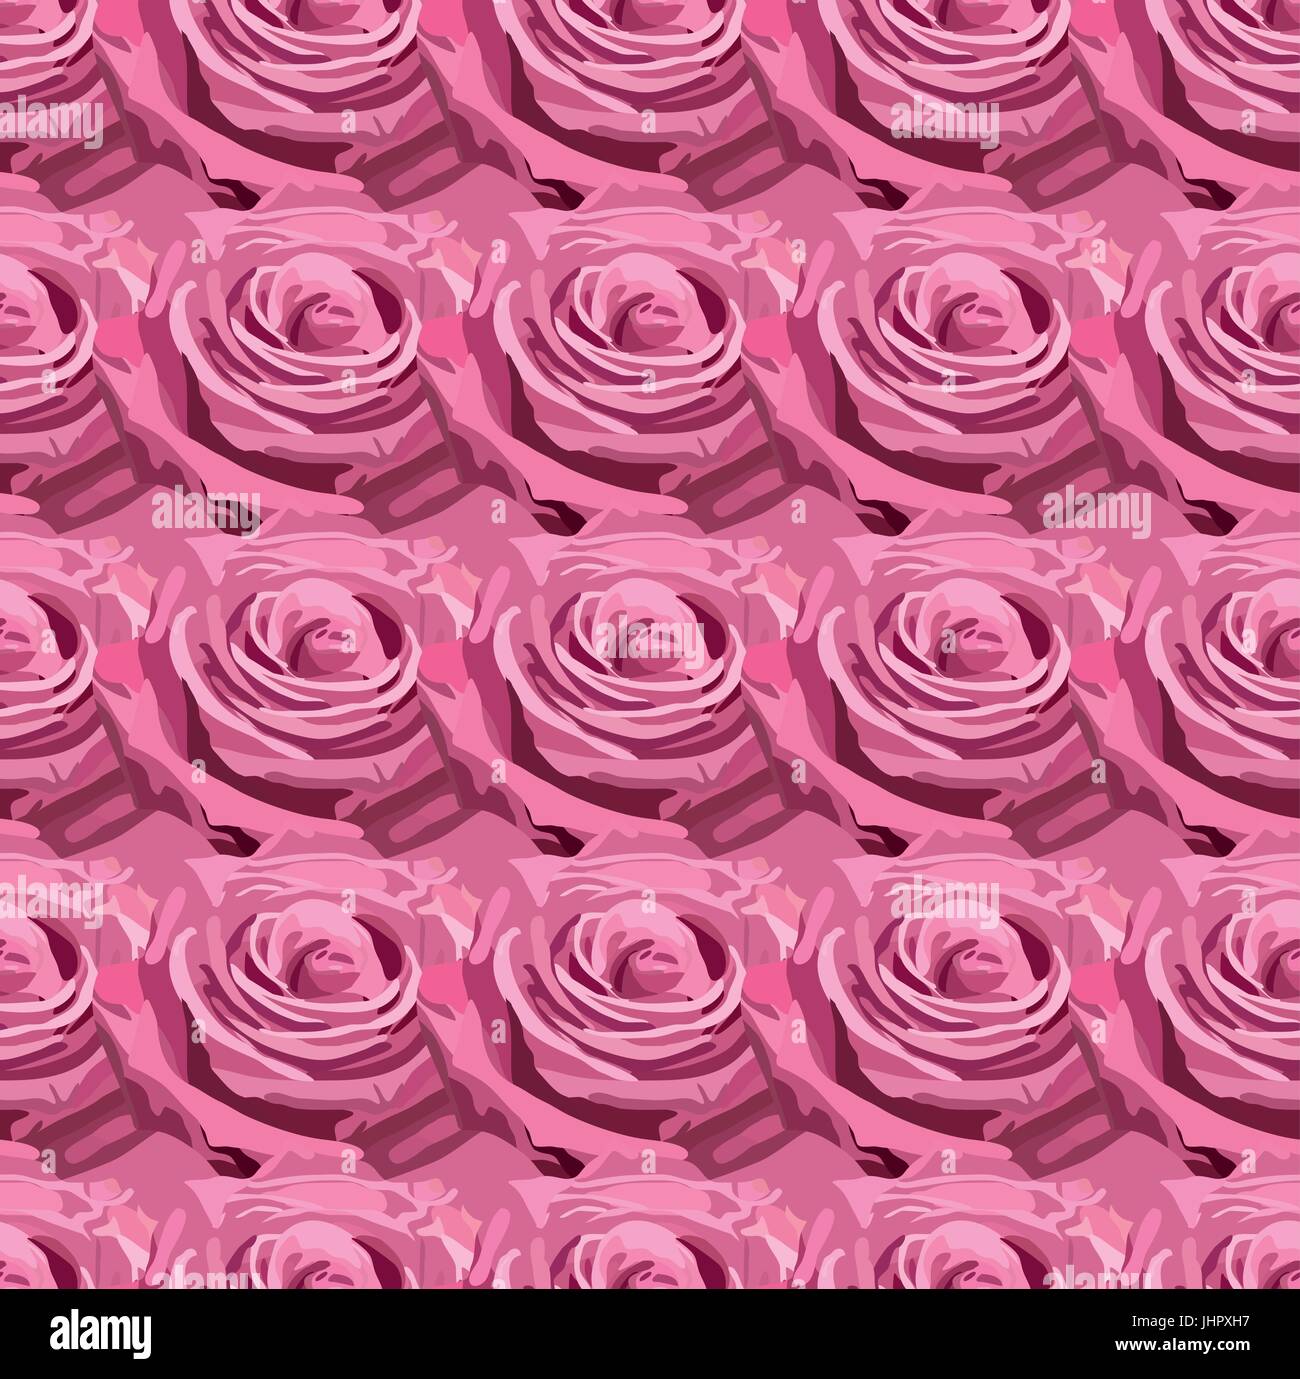 Vektor-Musterdesign Rosa Lavendel Rose Gartenblumen Elegant, floral Aquarell Illustration Design für Papier Hintergrund und Textile Kunst. CREA Stock Vektor